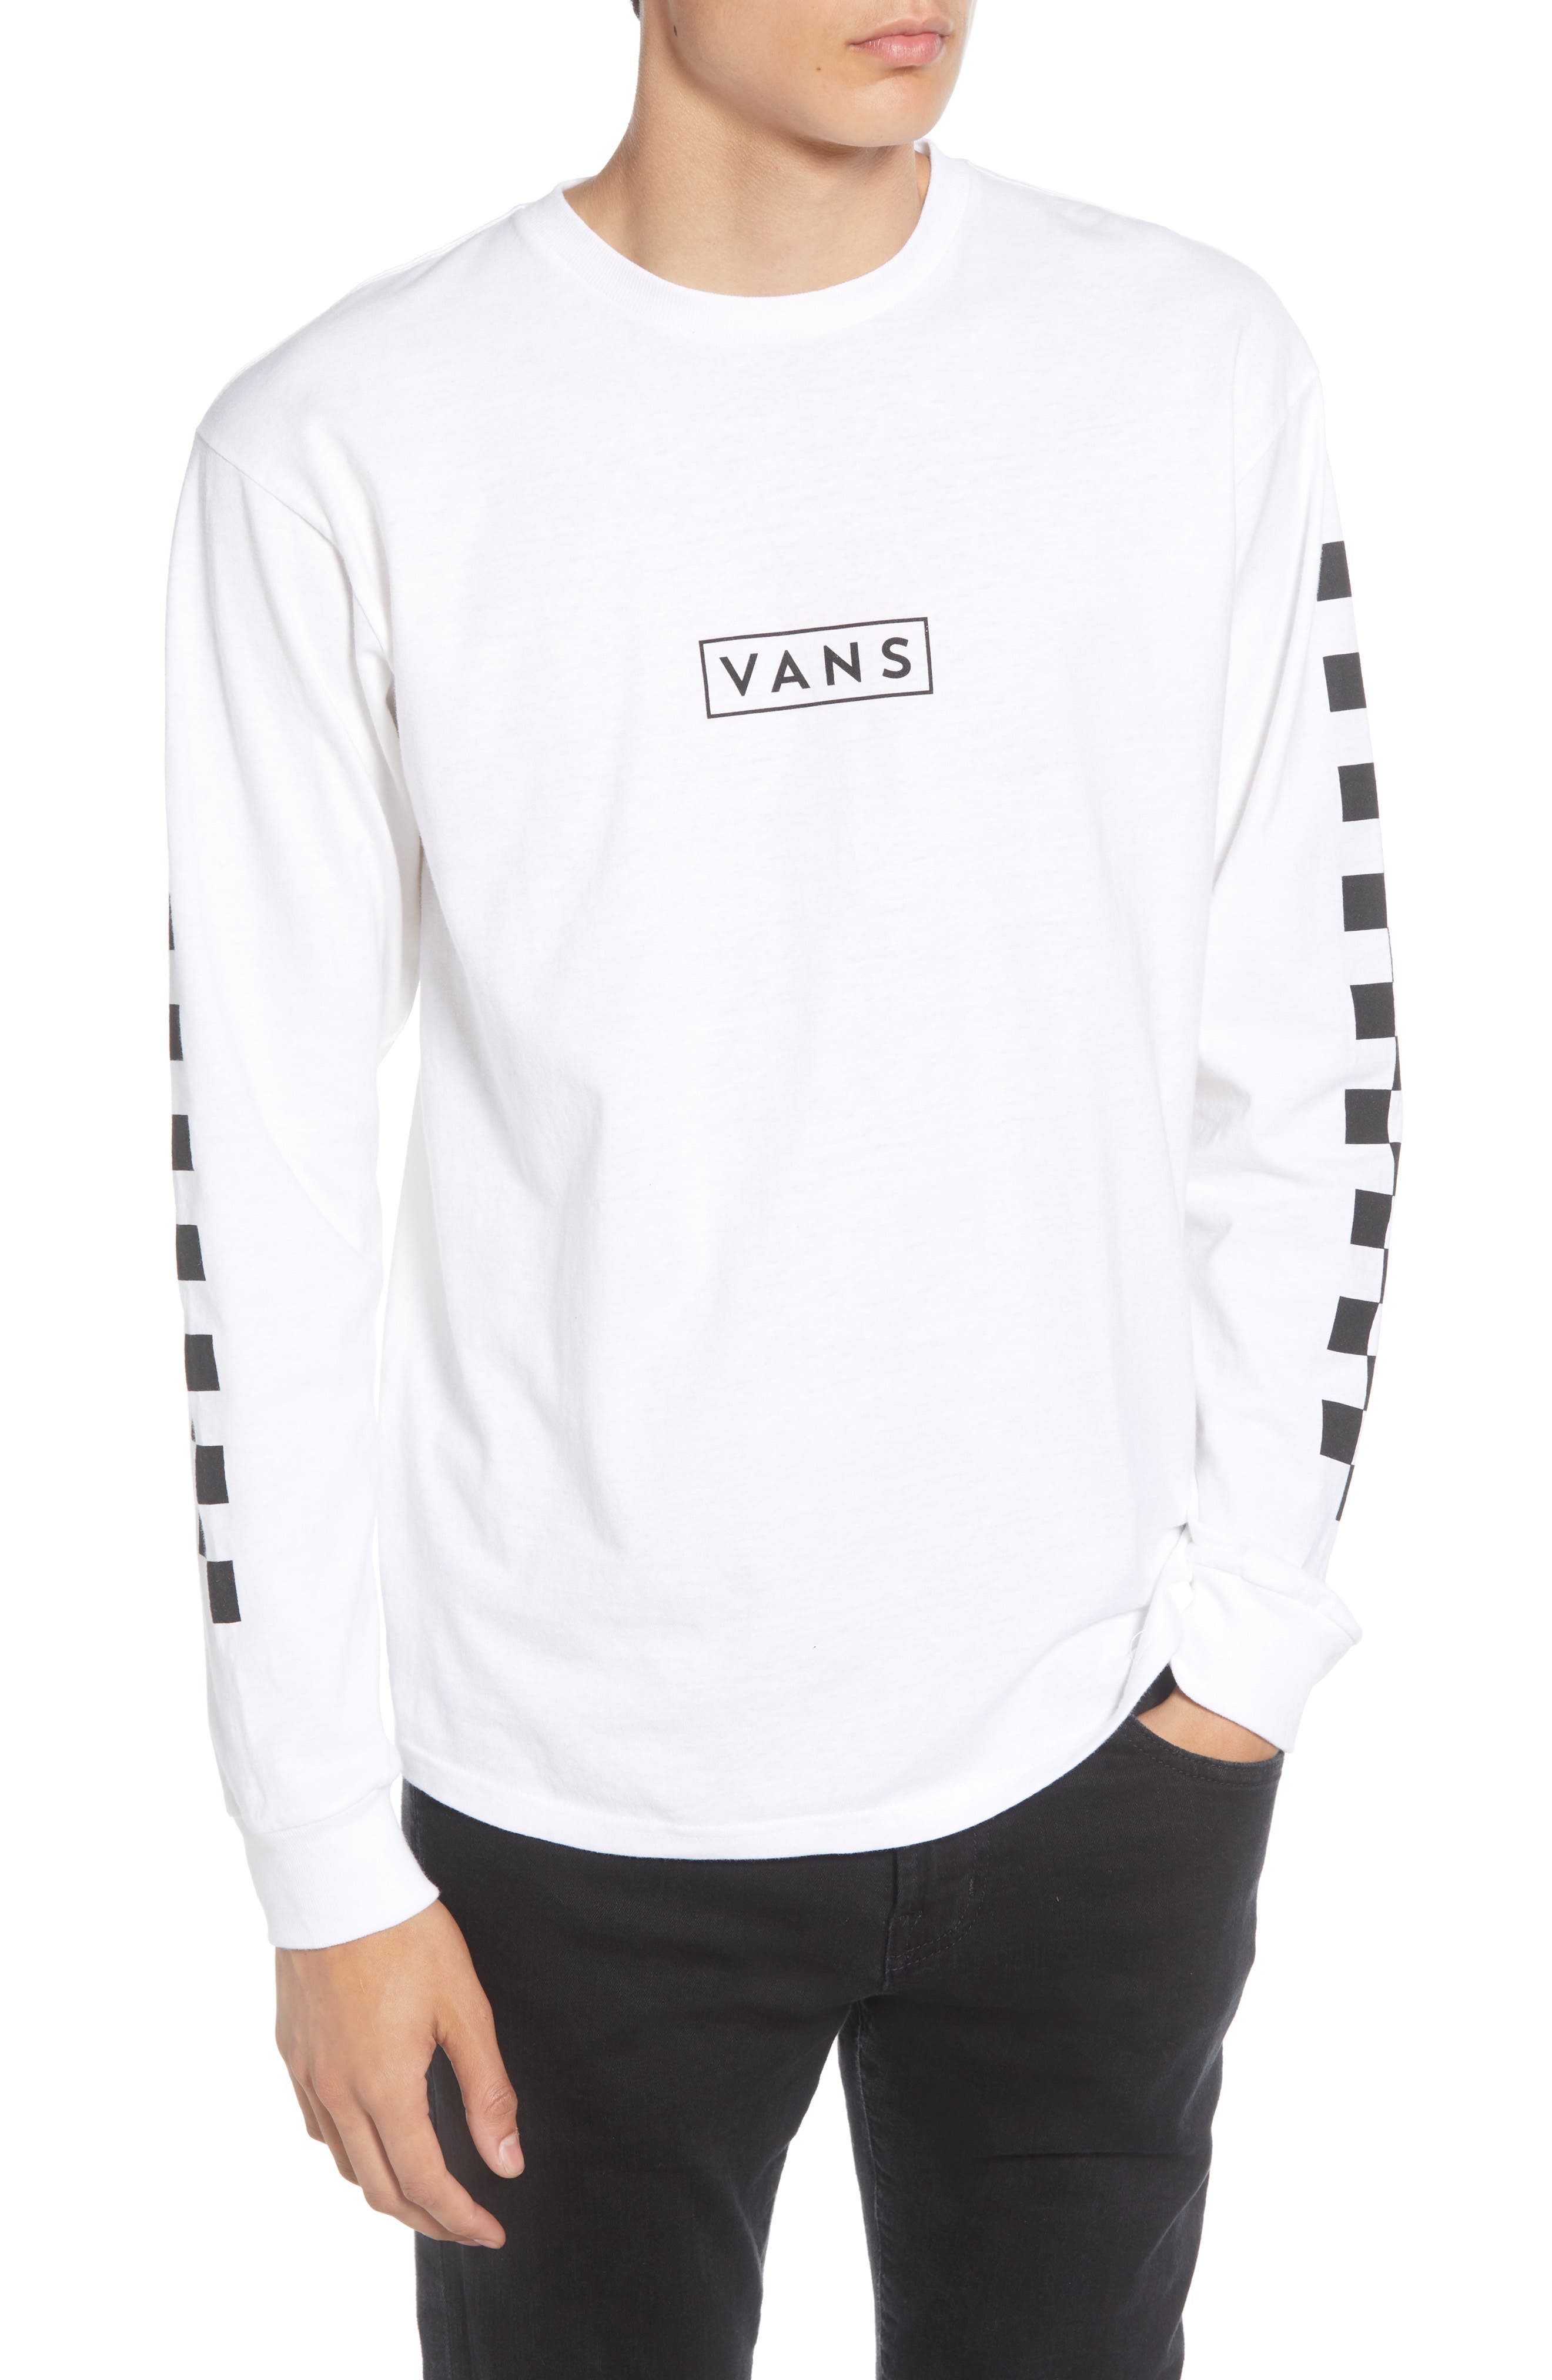 vans checkered sleeve shirt